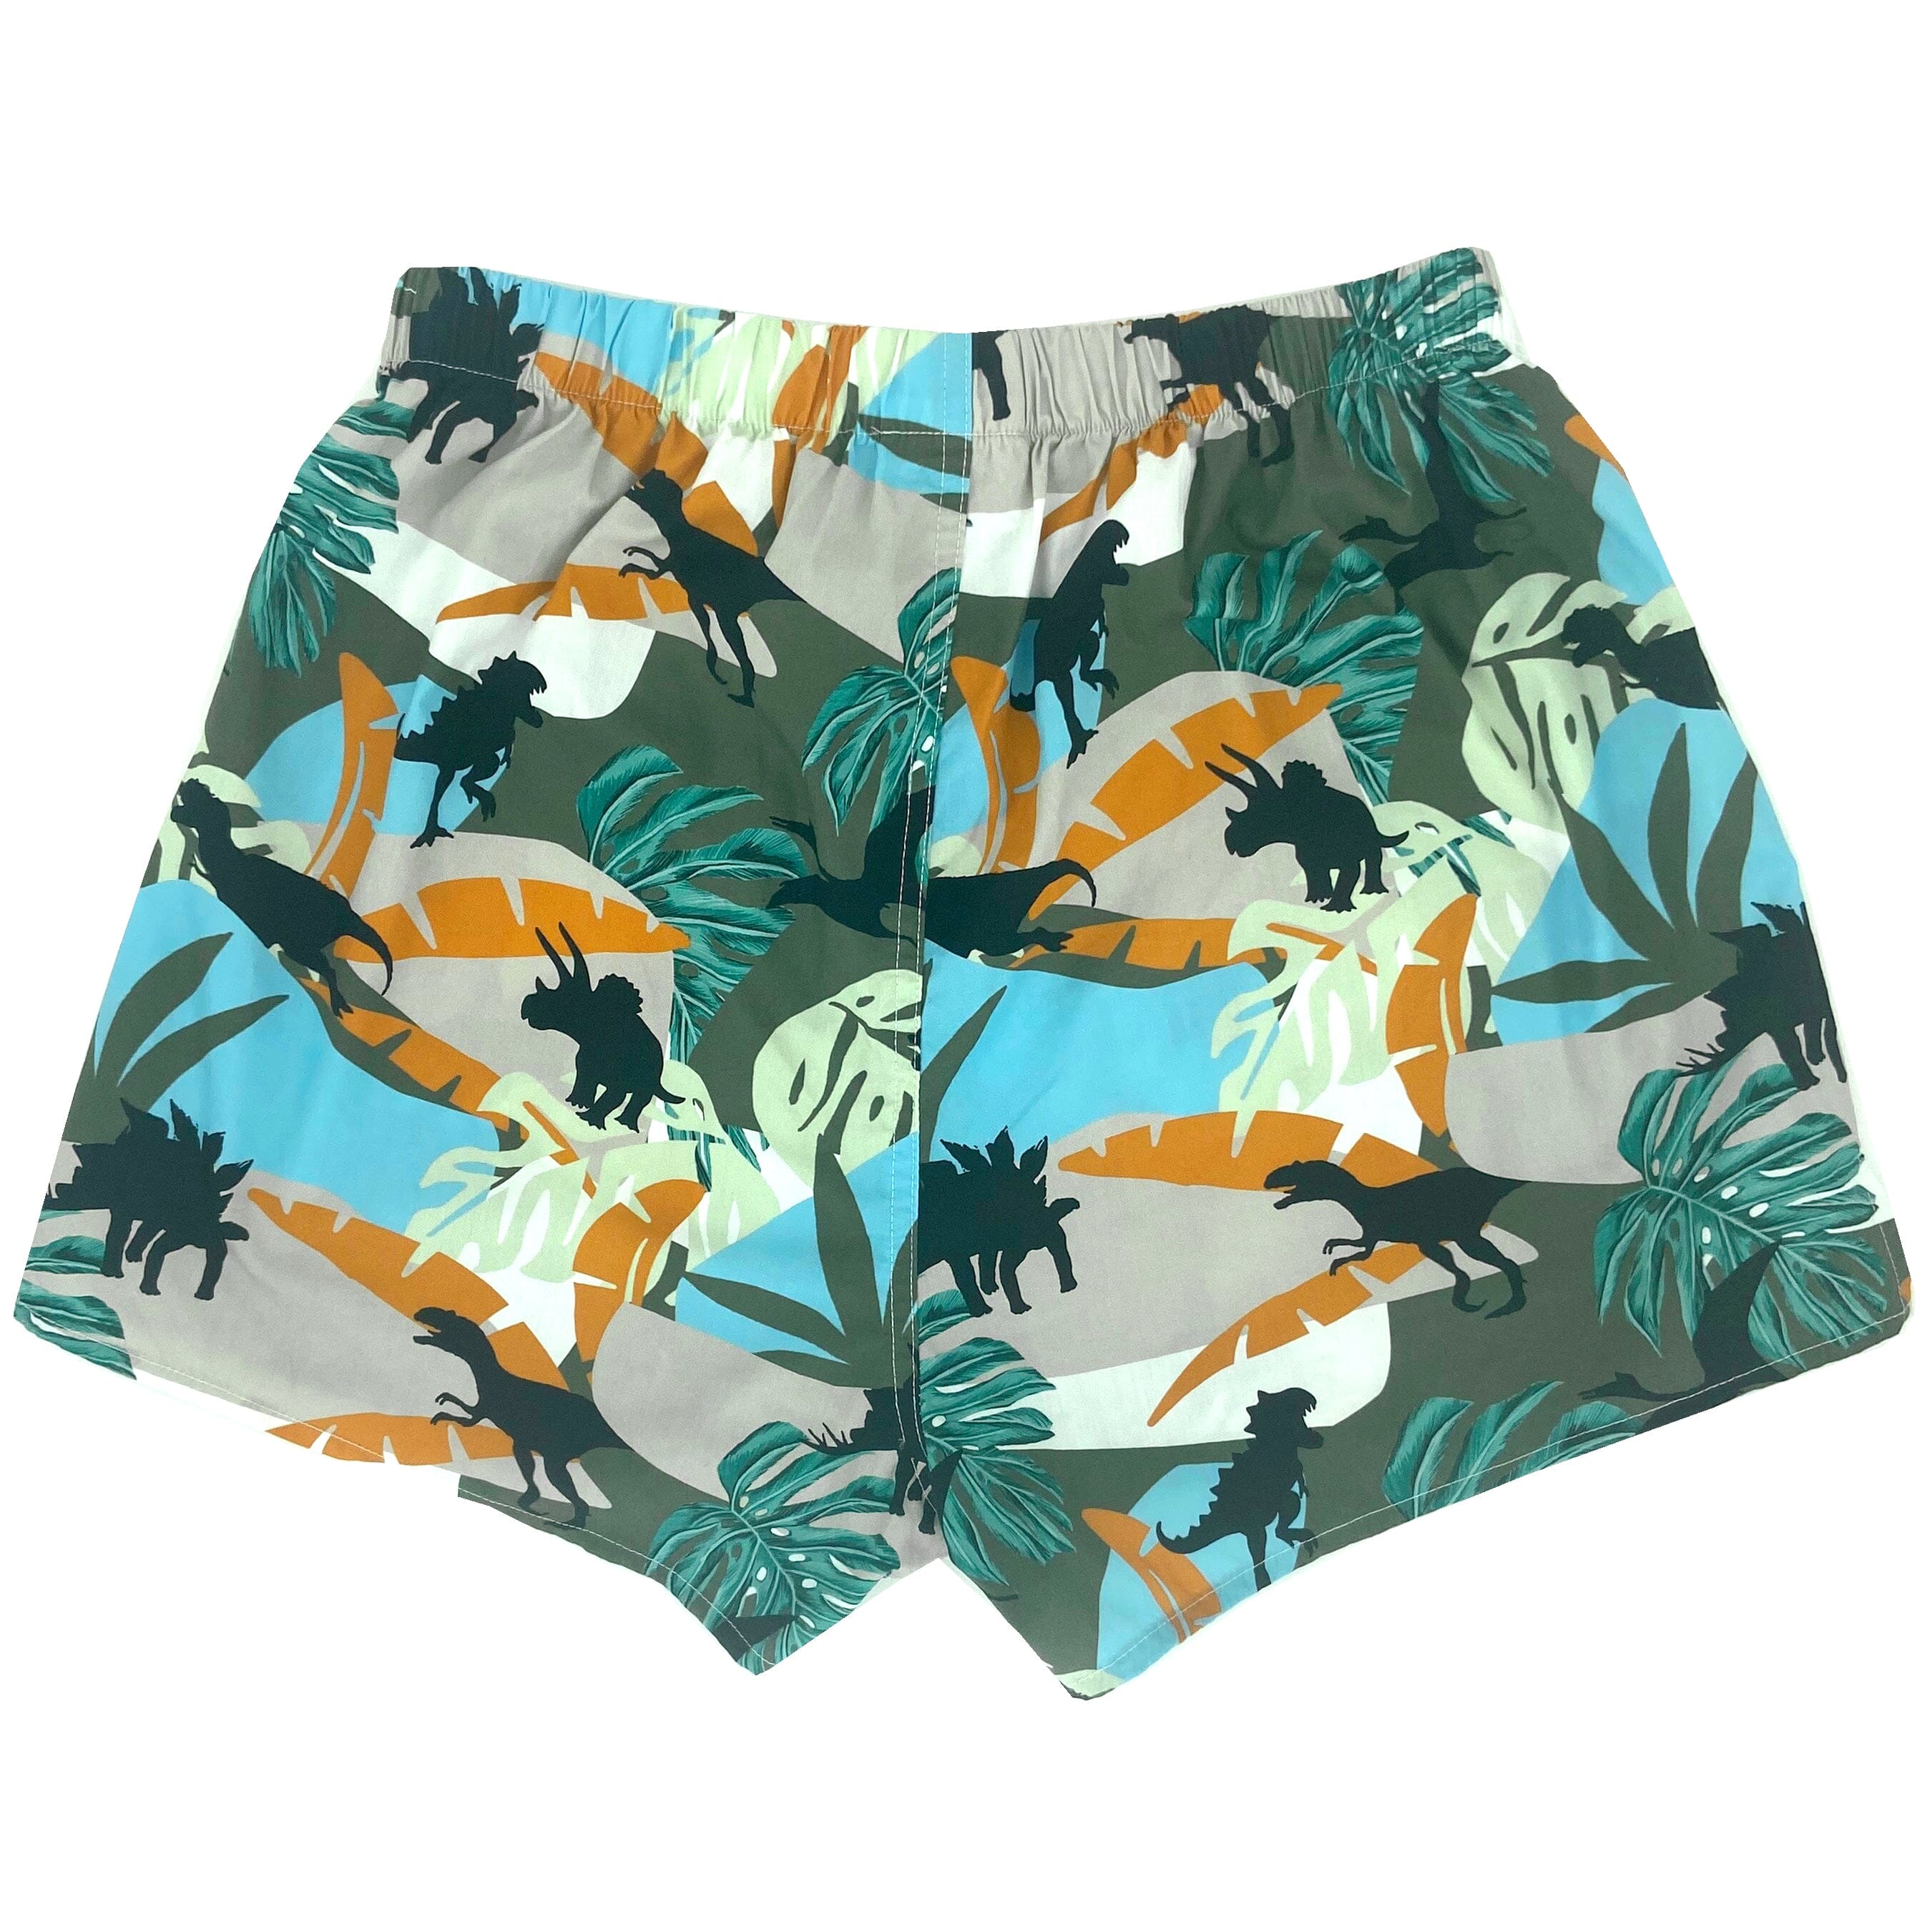 Fun Dinosaur Underwear For Adults. Shop Dinosaur Boxer Shorts for Men